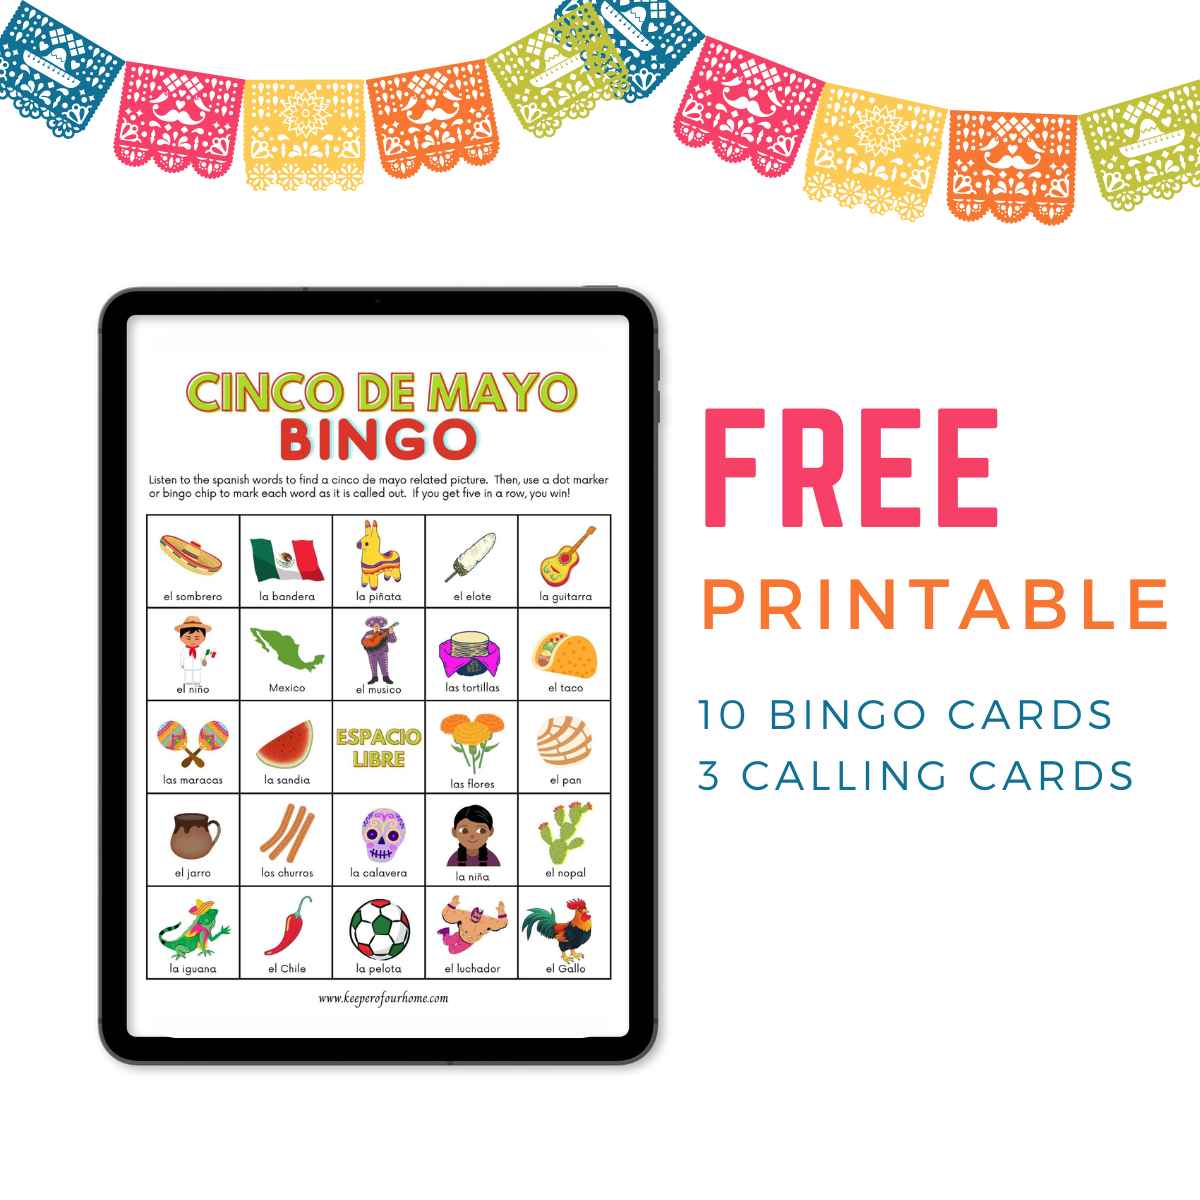 Cinco de mayo bingo free printable